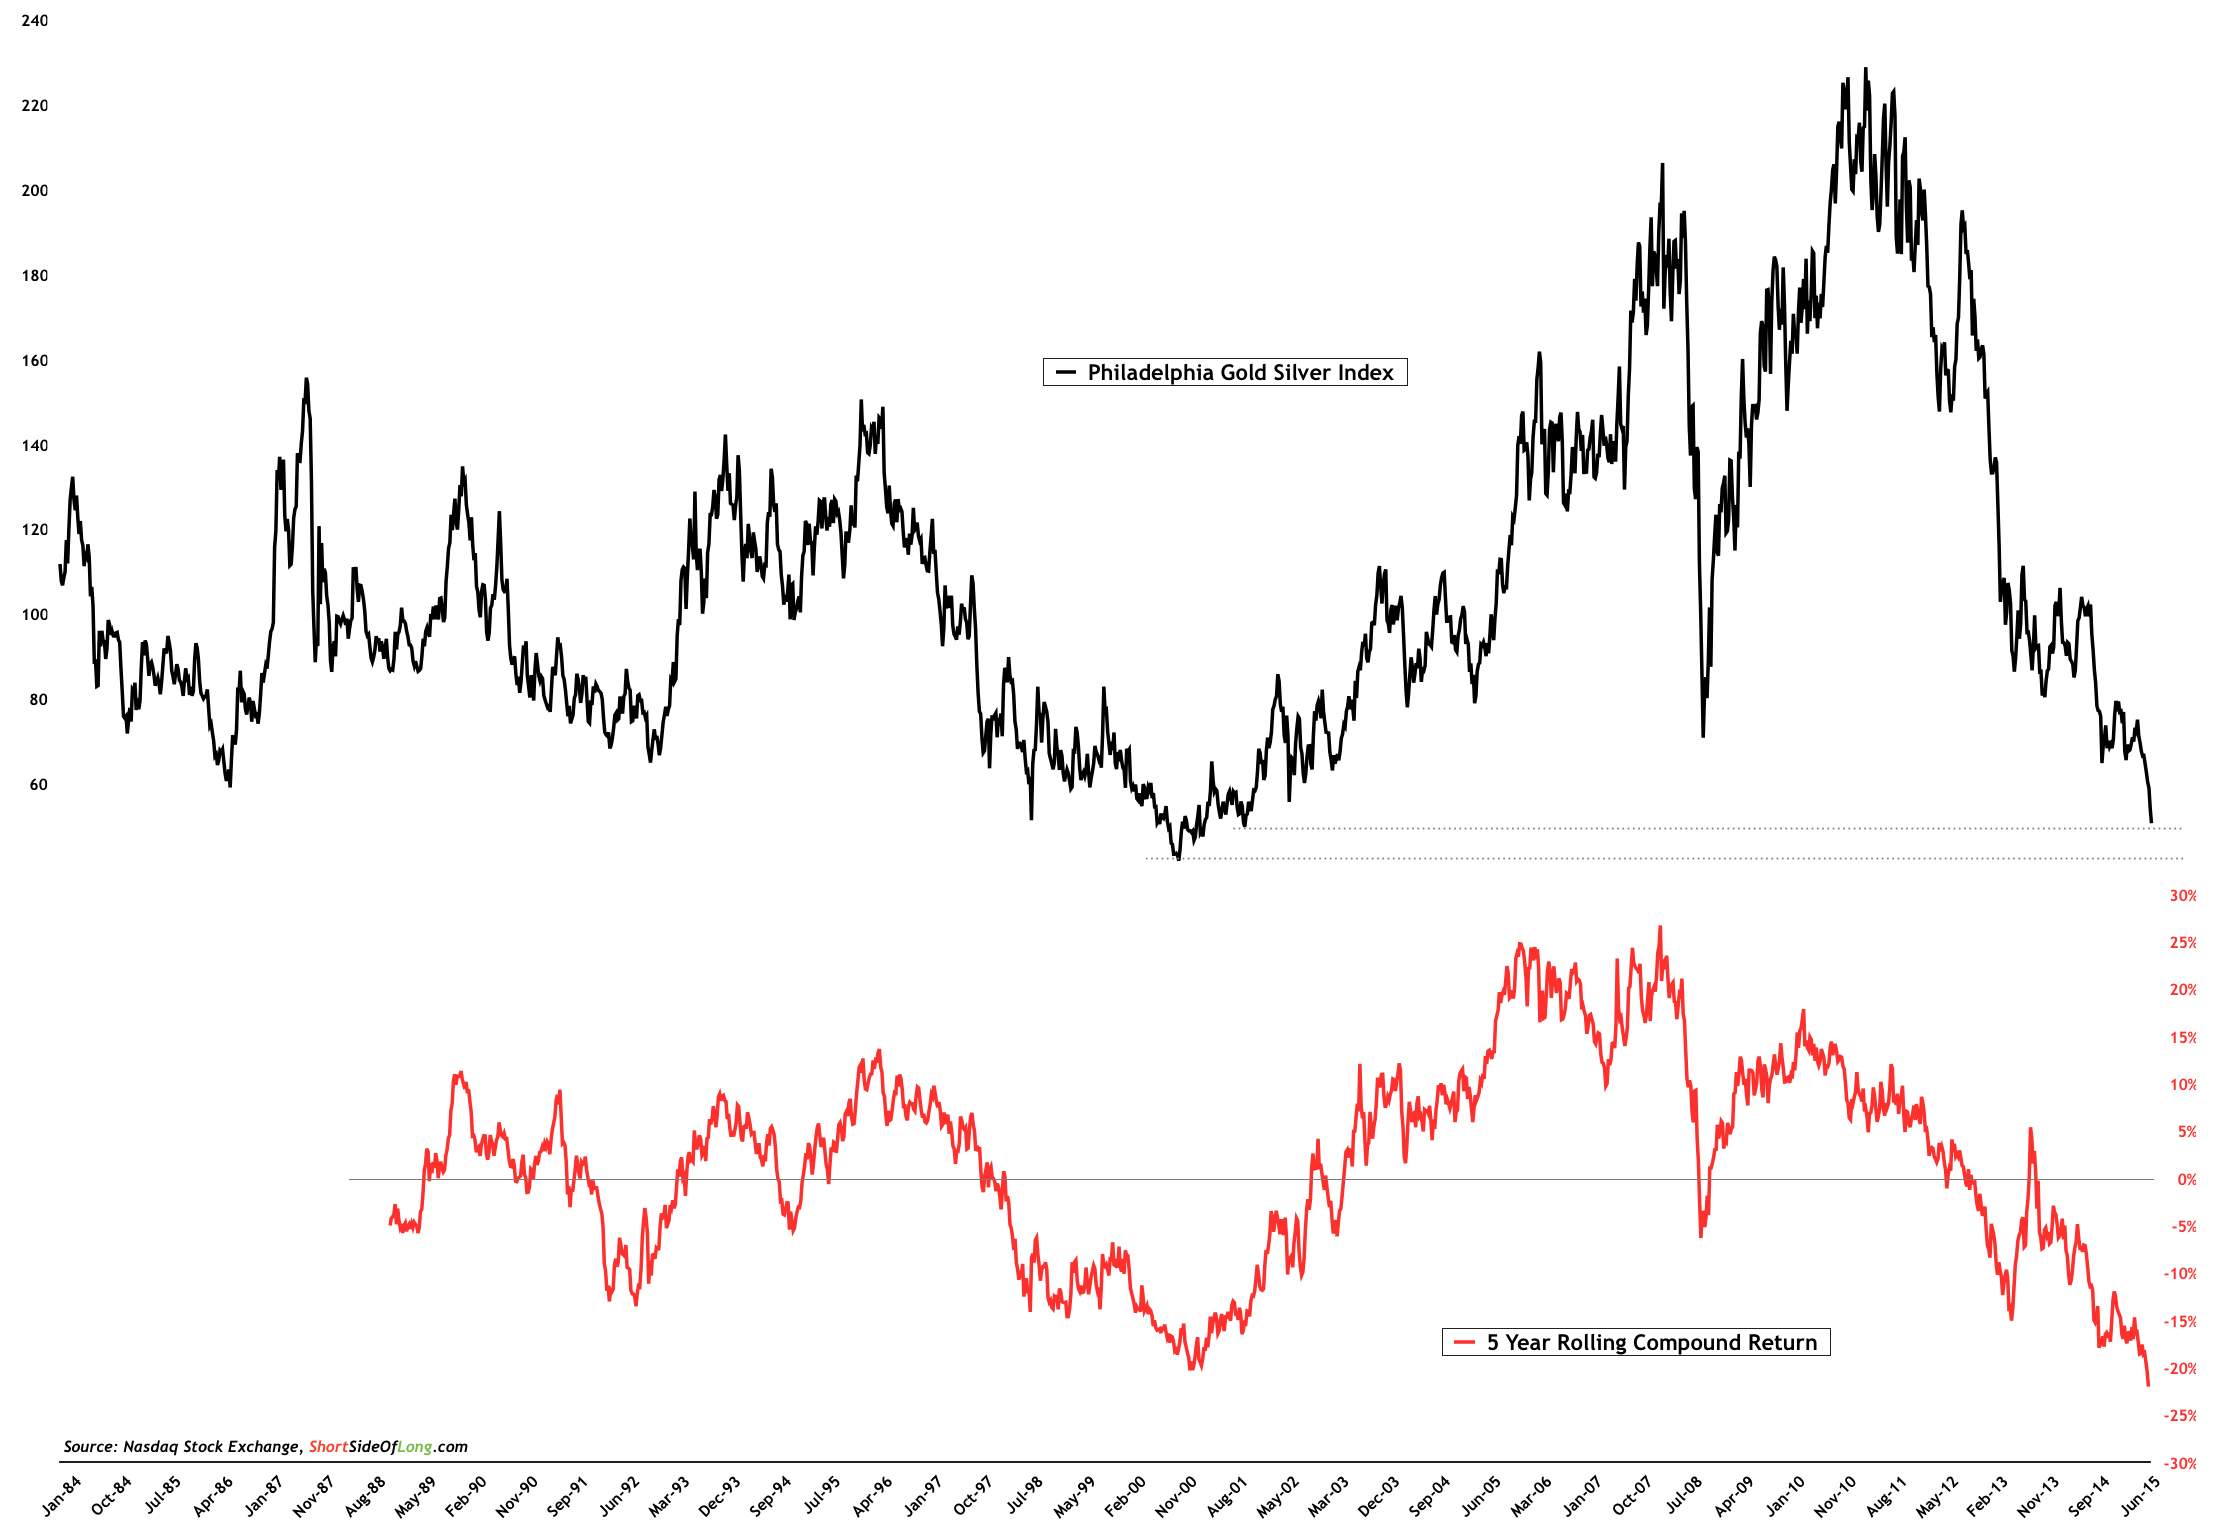 Gold/Silver Index vs 5-Y Compound Return 1984-2015